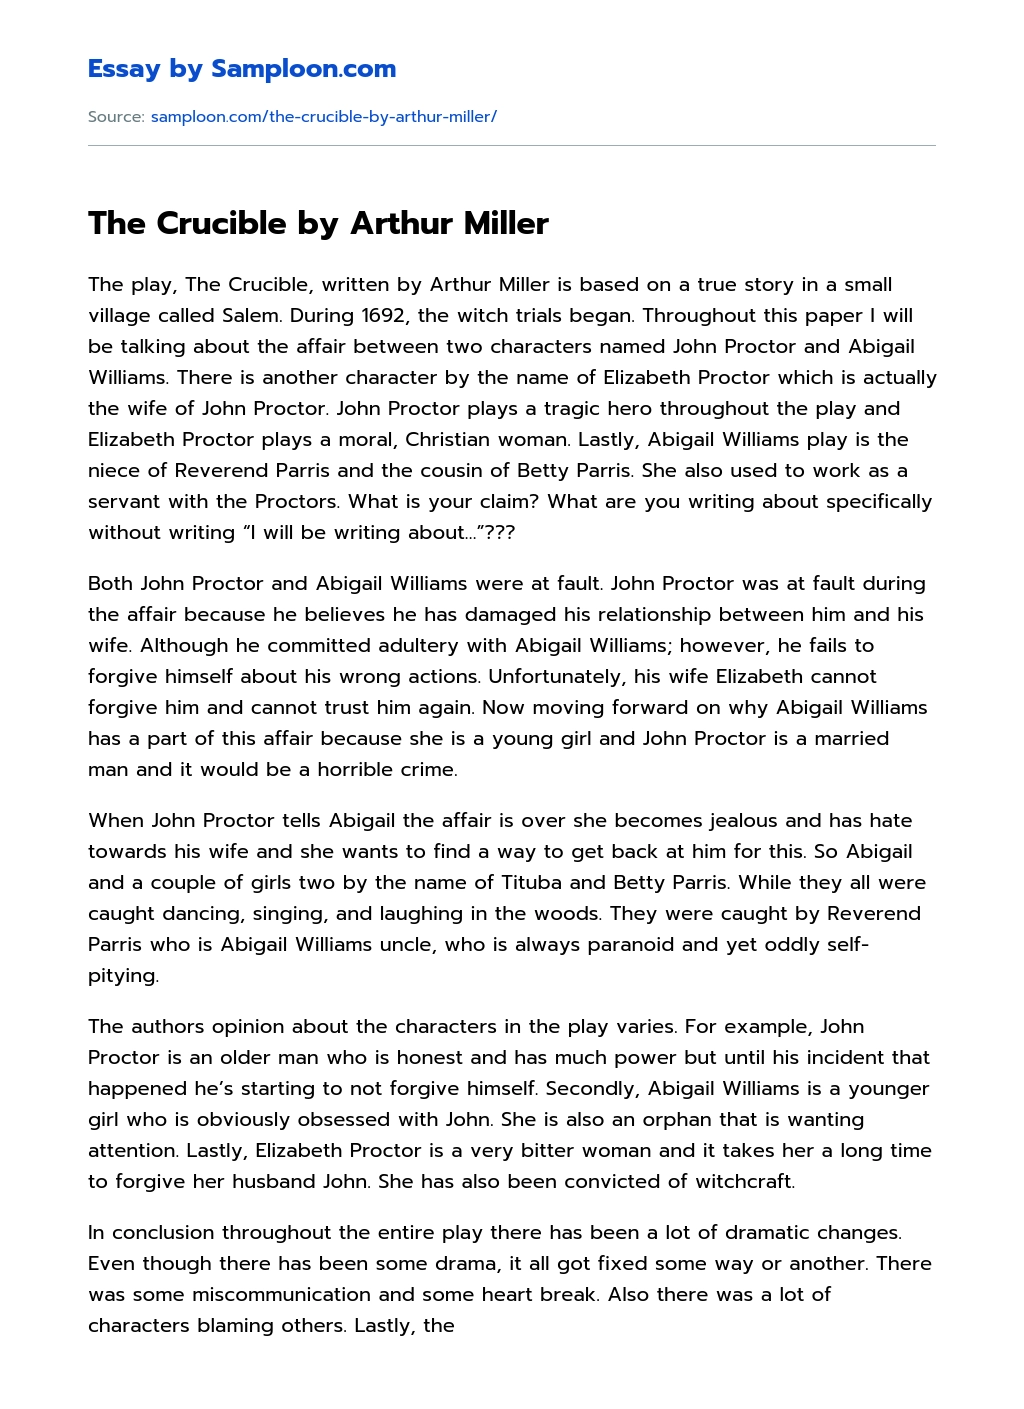 The Crucible by Arthur Miller essay